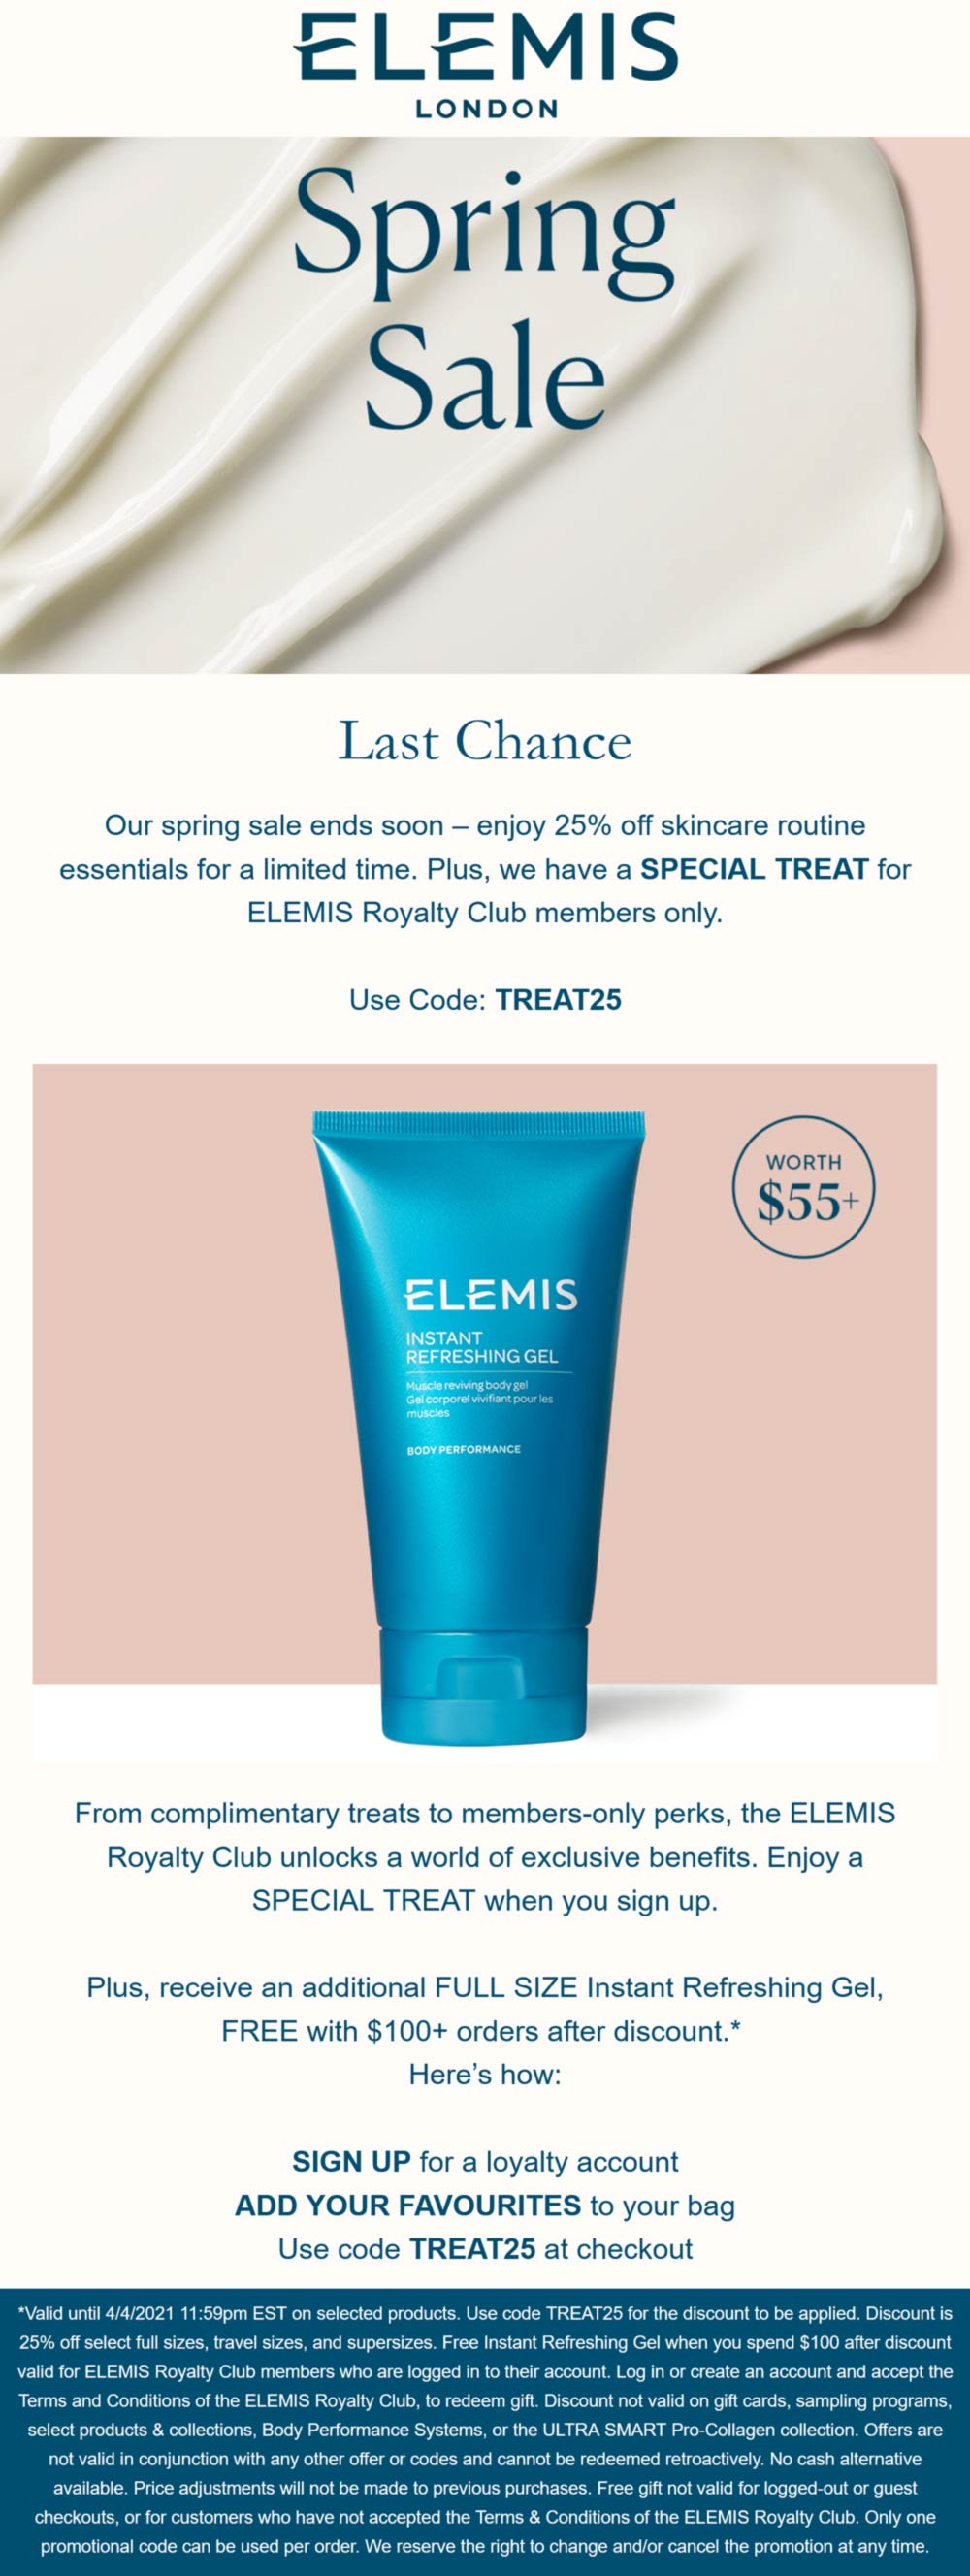 ELEMIS stores Coupon  25% off skincare + free full size on $100 spent today at ELEMIS via promo code TREAT25 #elemis 